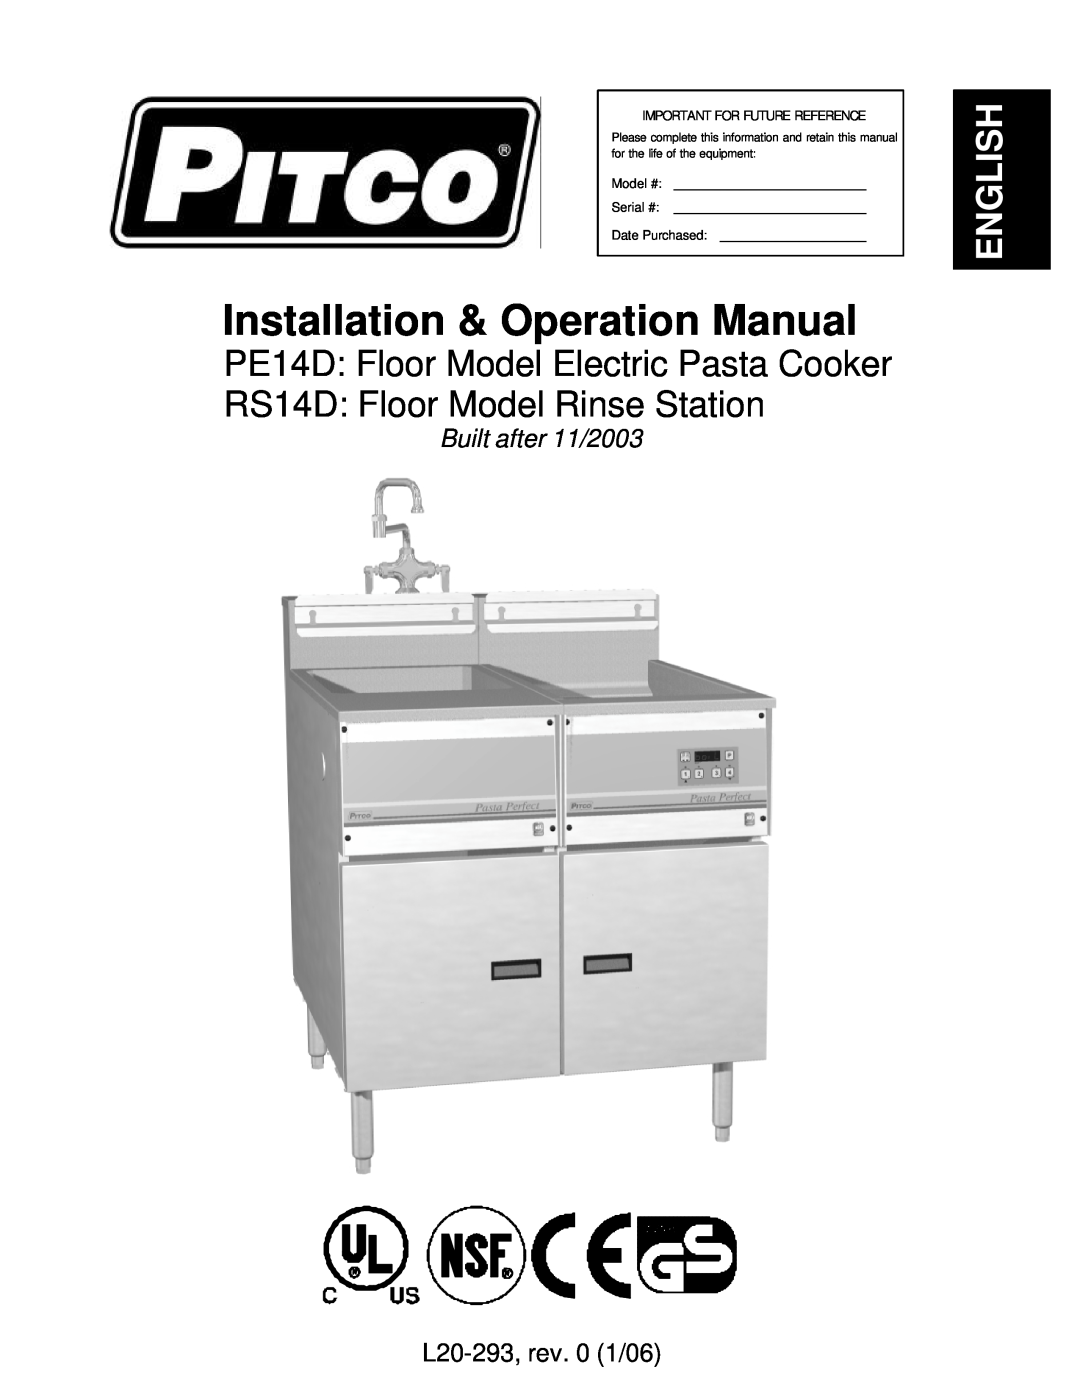 Pitco Frialator operation manual L20-293, rev. 0 1/06, Installation & Operation Manual, RS14D Floor Model Rinse Station 